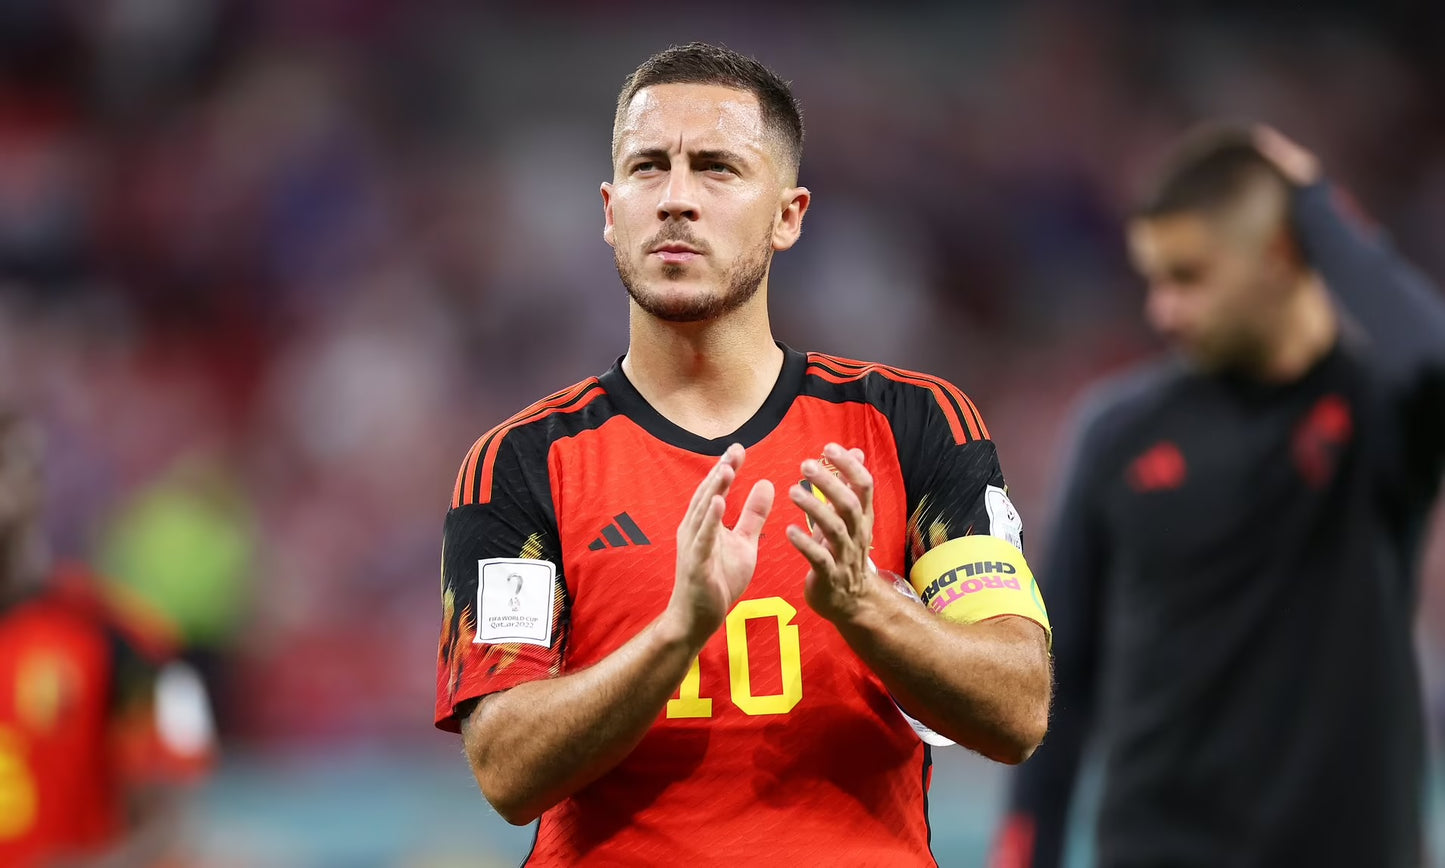 Eden Hazard Belgium National Soccer Team 2022 World Cup Adidas Authentic Home Fan Version Jersey - Red